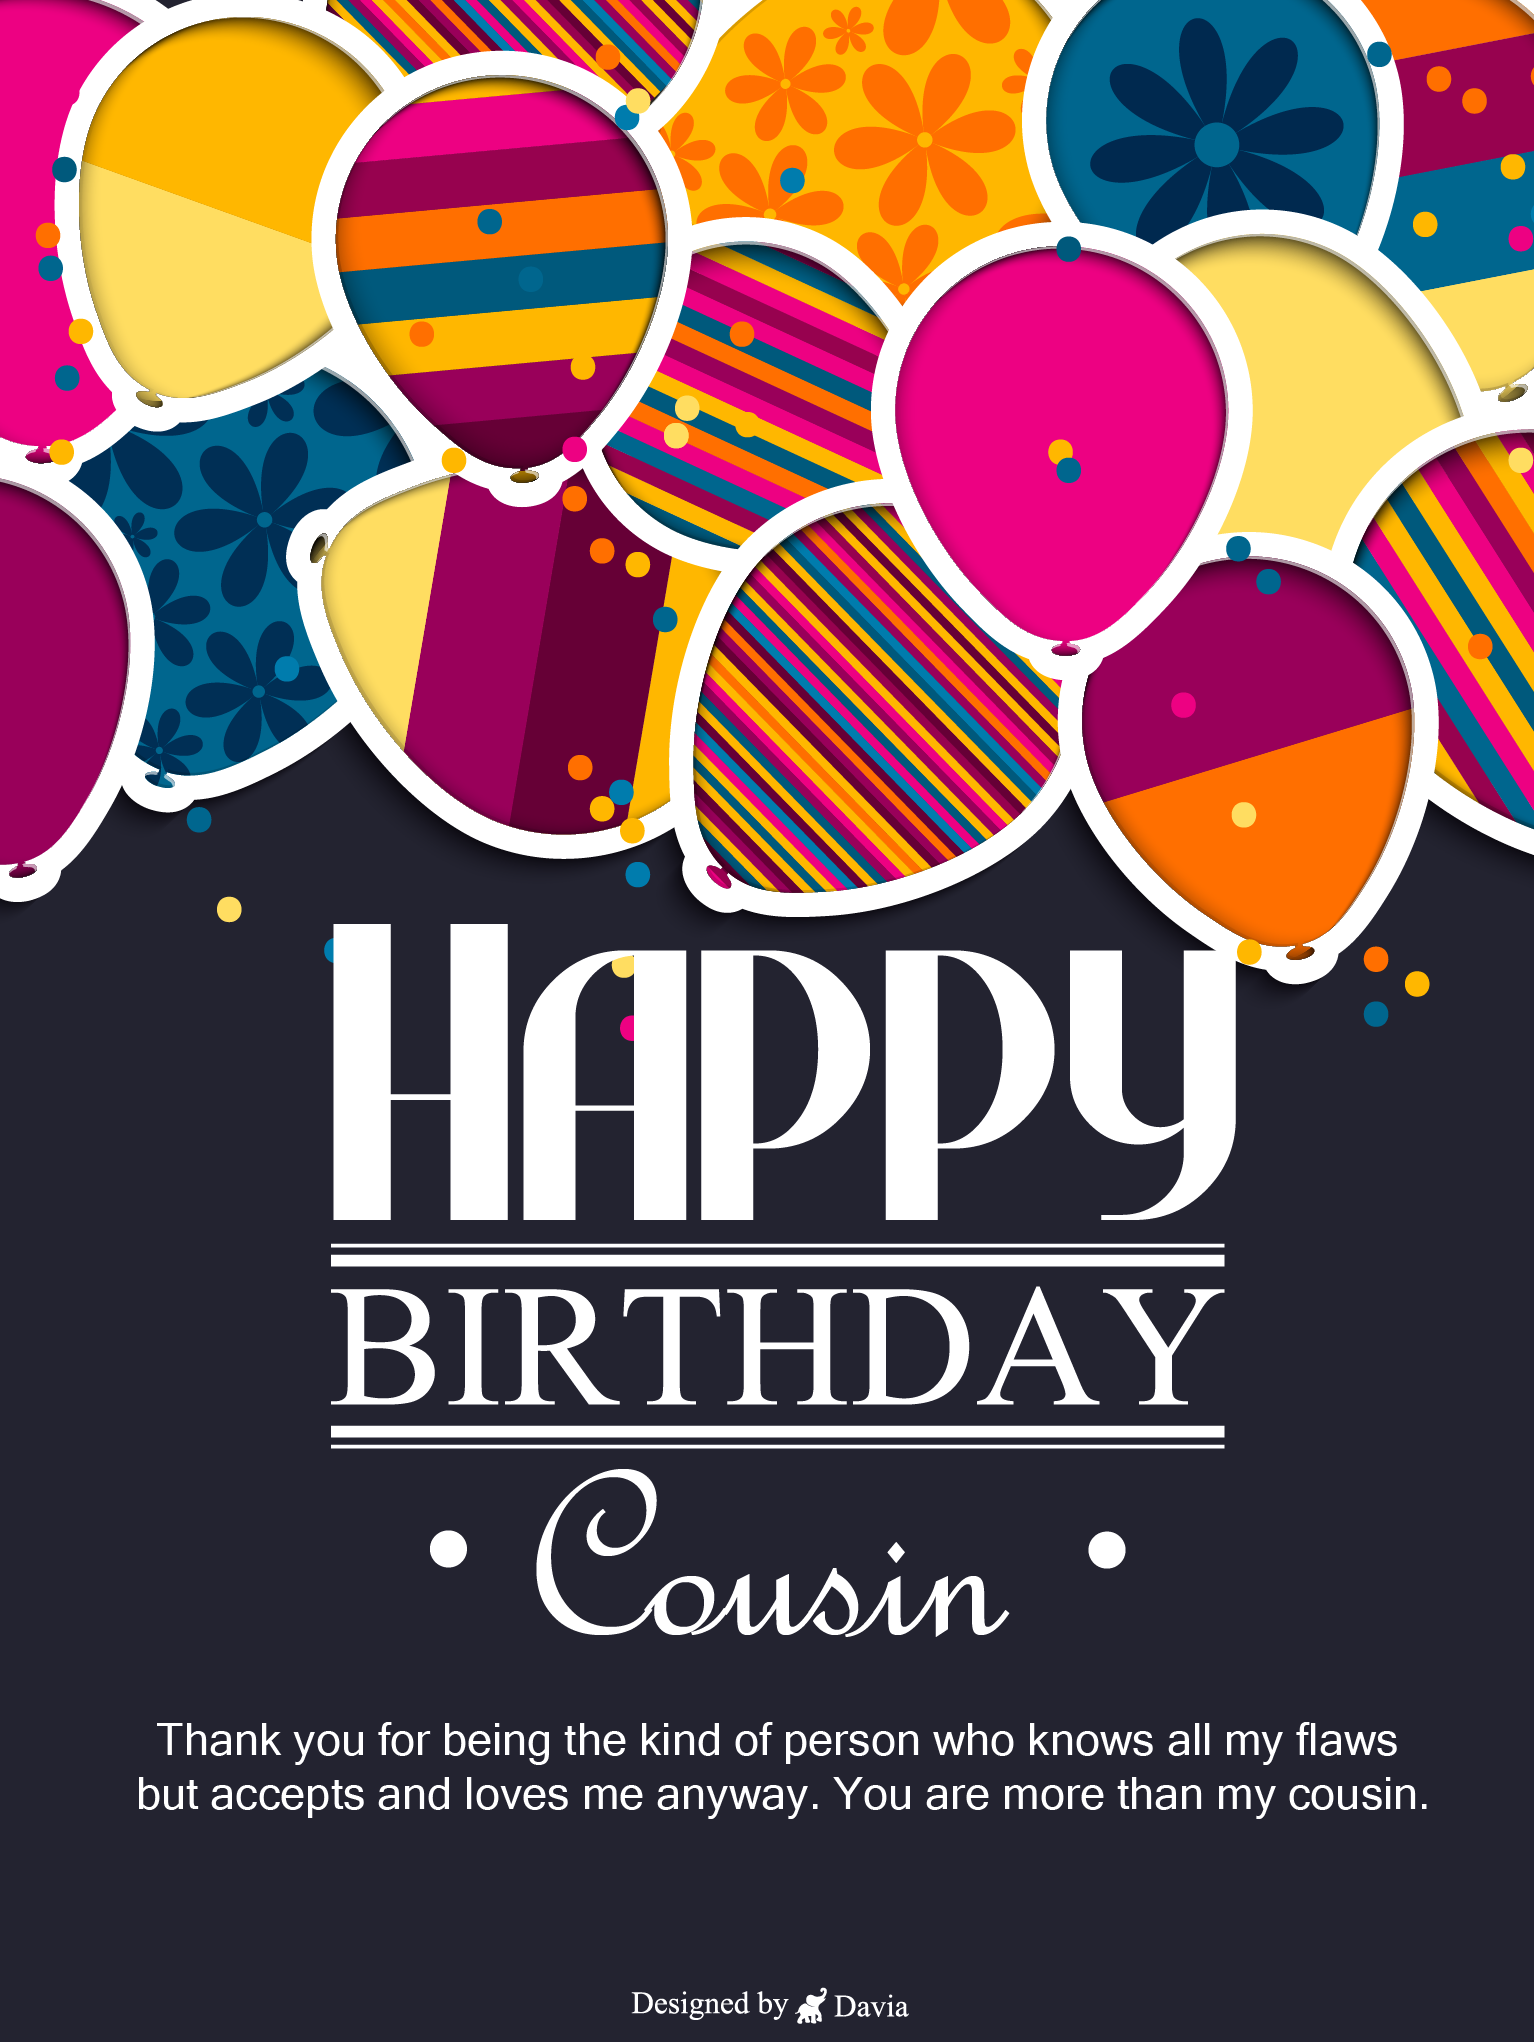 Happy birthday image for cousin